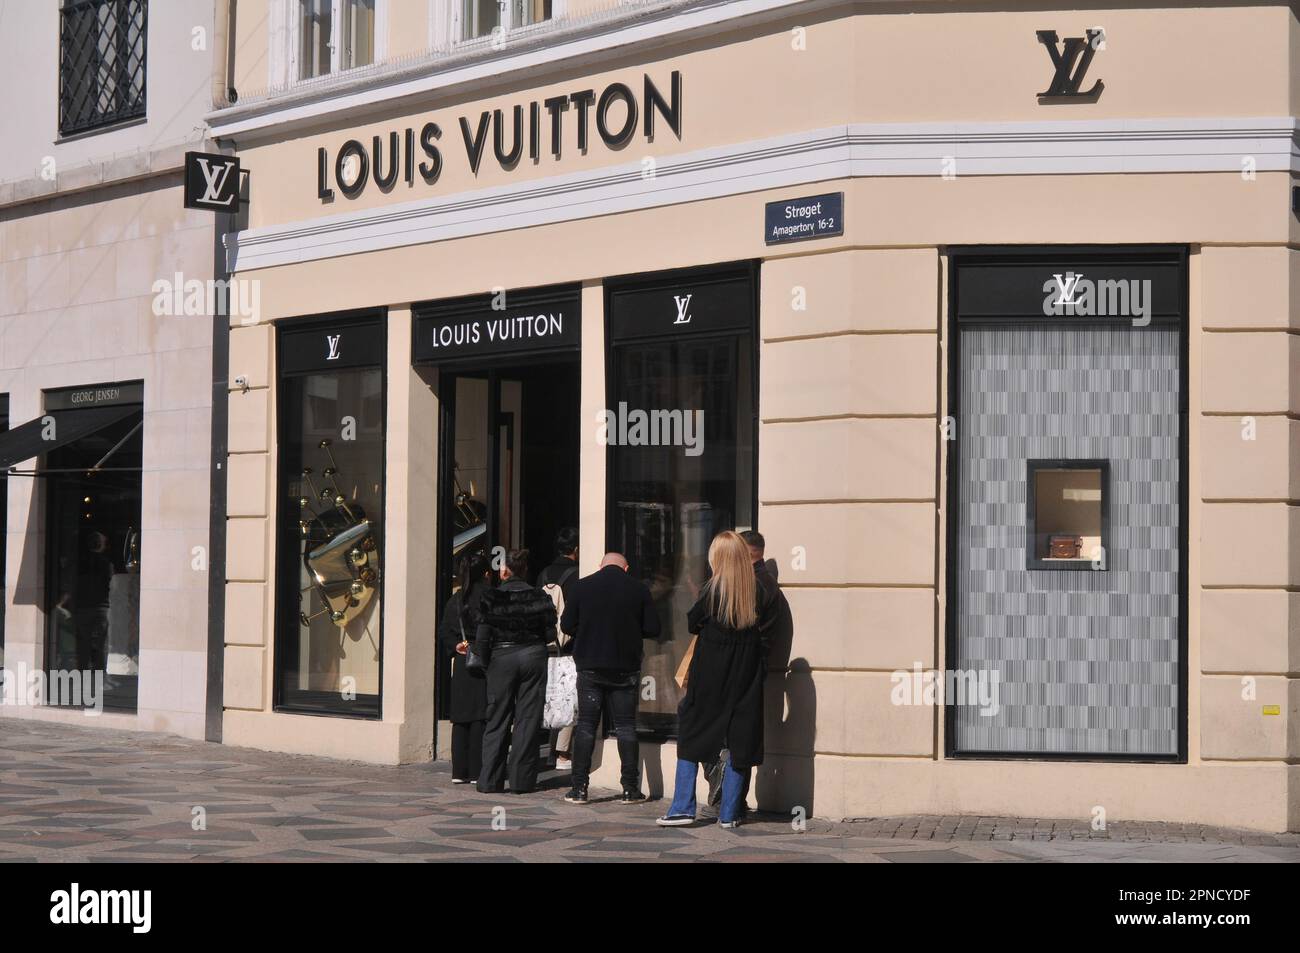 Louis Vuitton Fashion Brand Editorial Stock Image - Image of marina,  tourism: 132929934